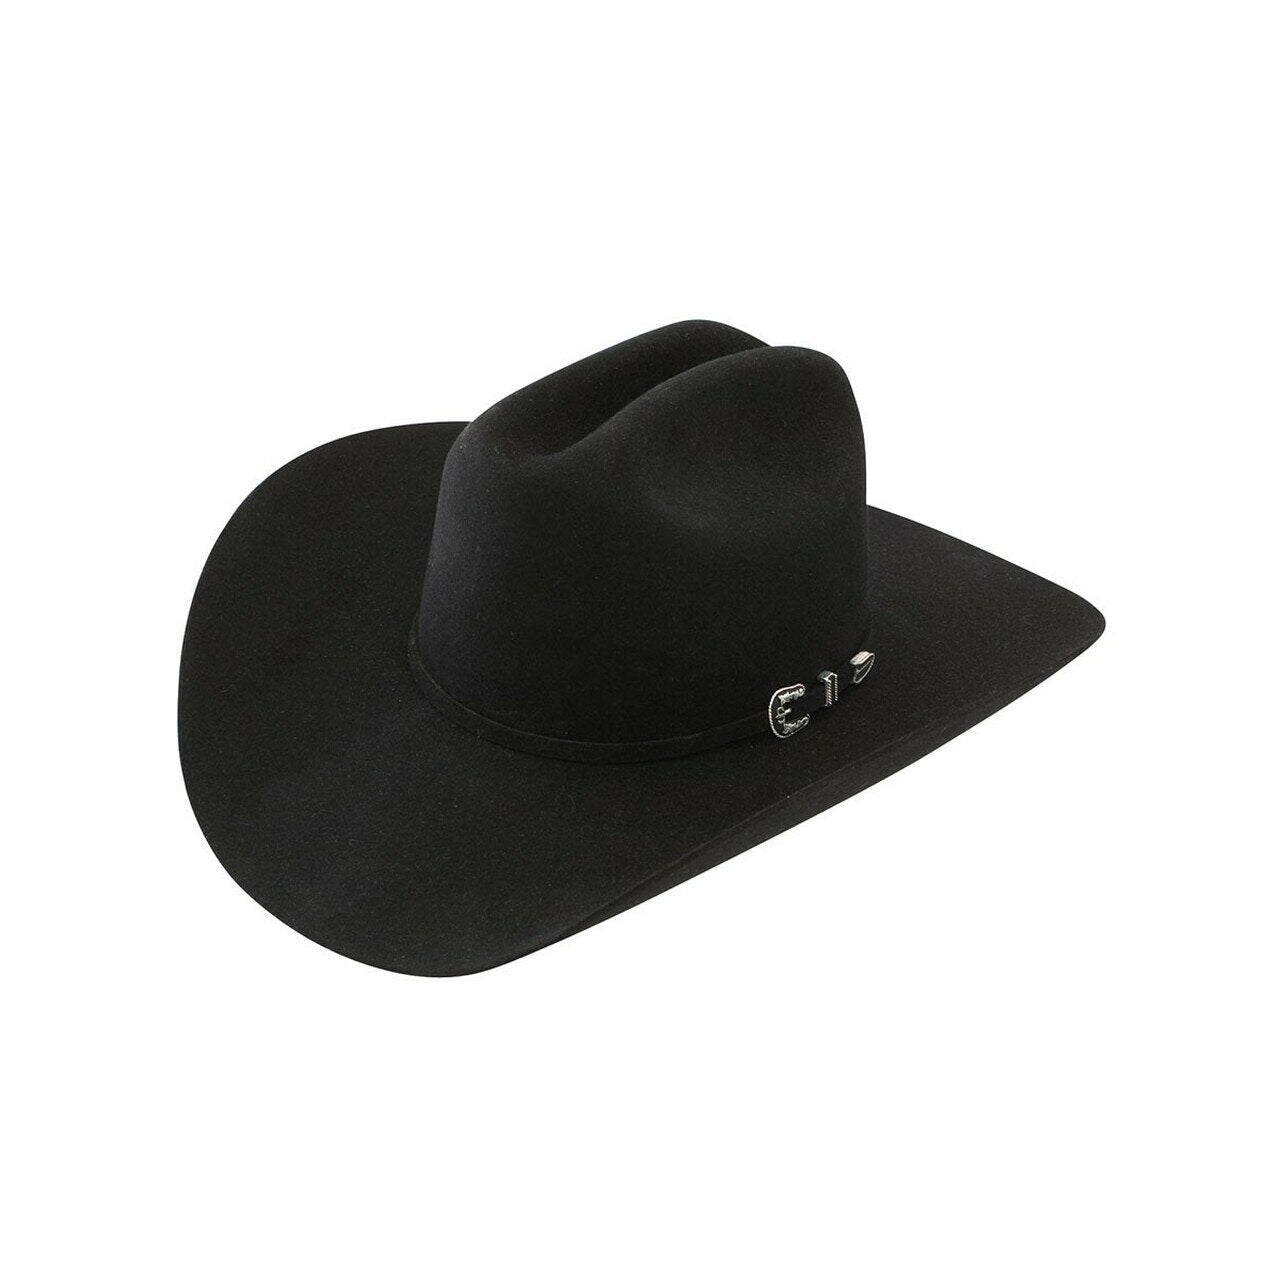 Stetson Skyline 6X Felt Cowboy Hat